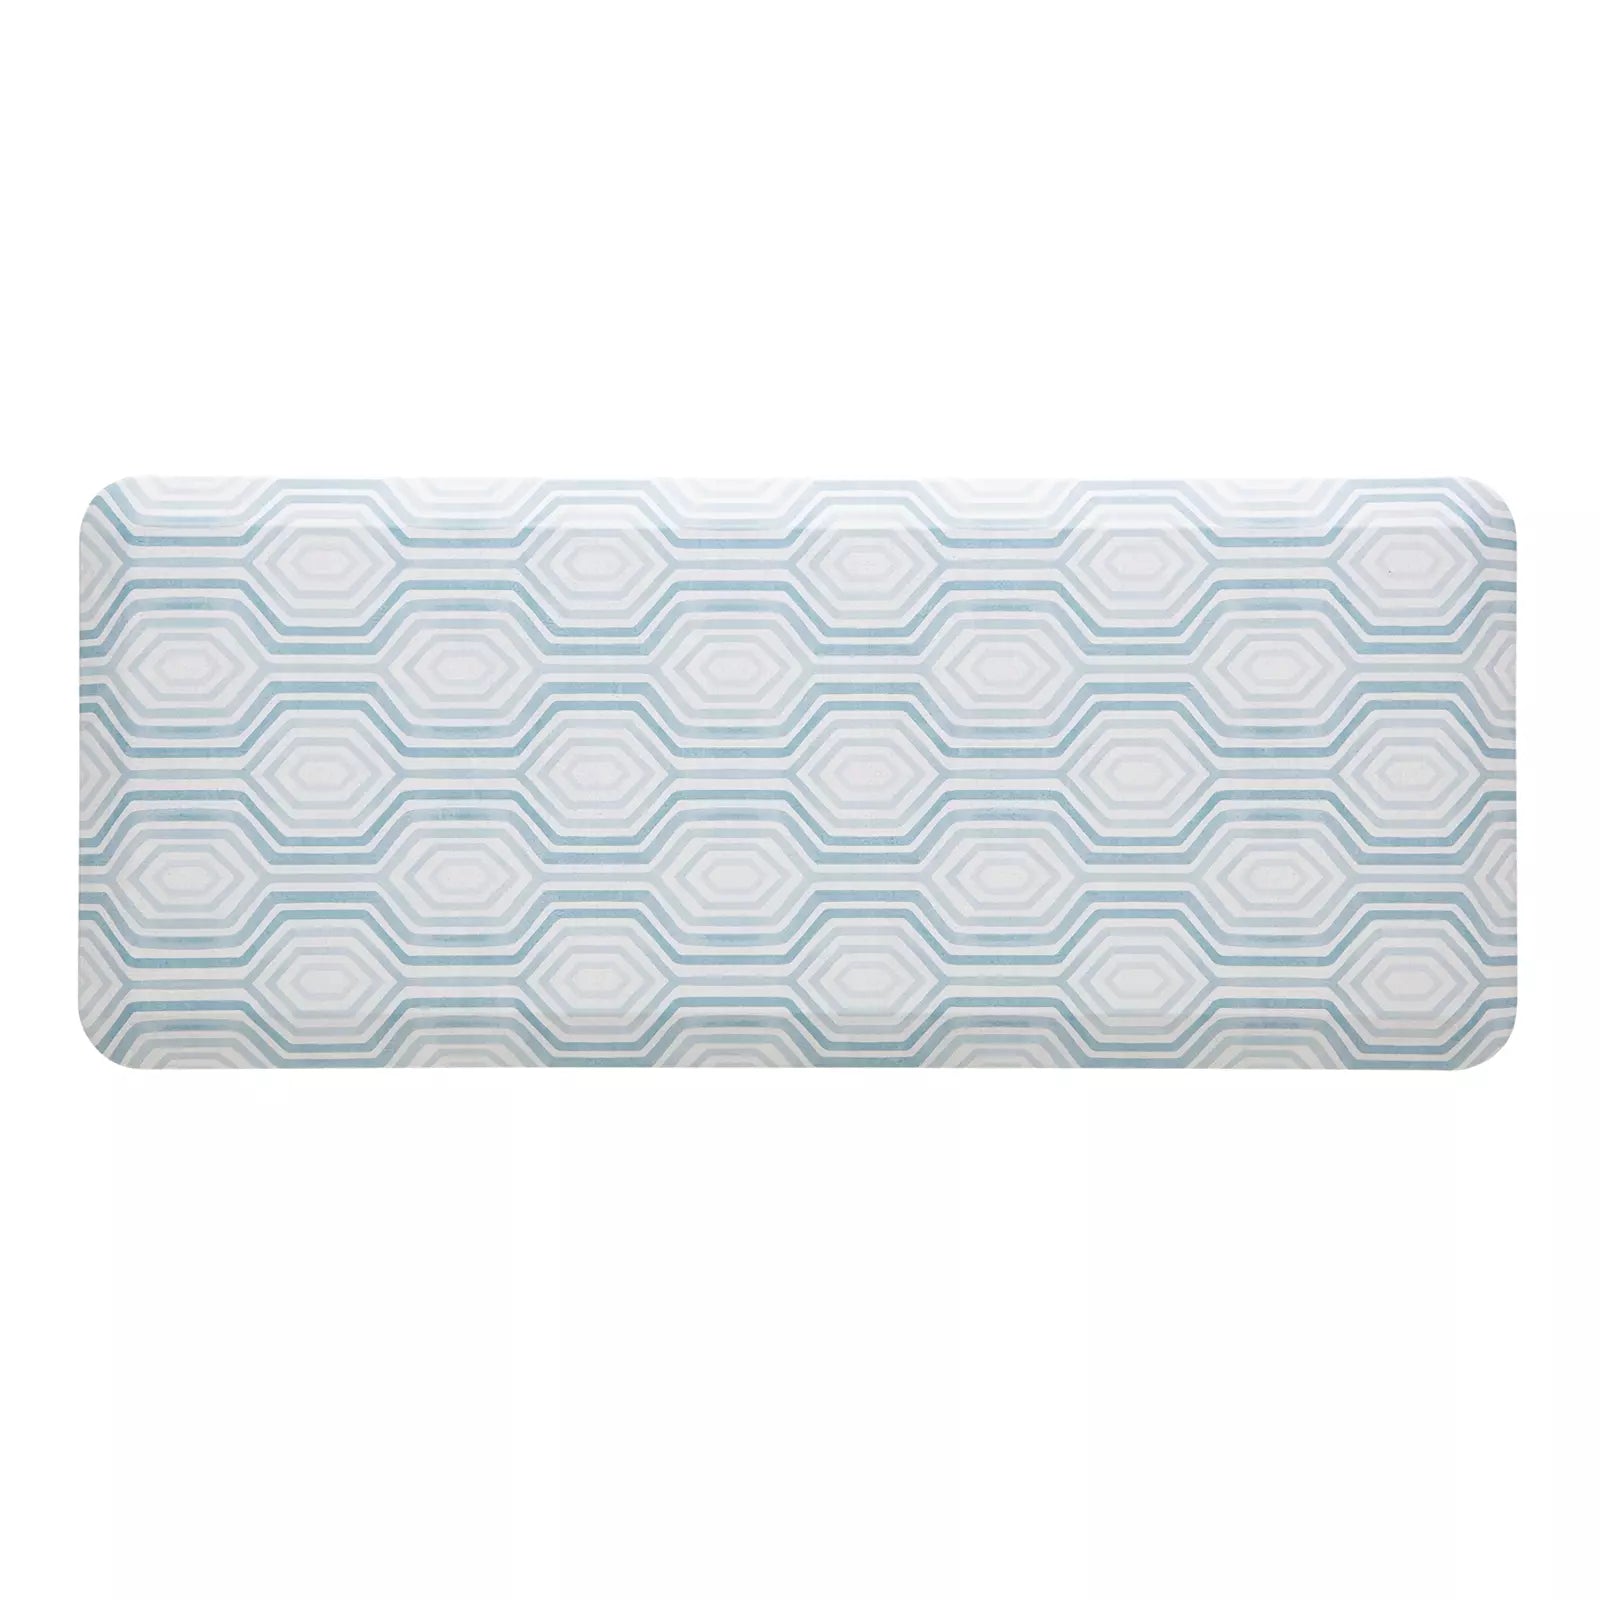 Blake waves blue and white mod preppy geometric print kitchen mat shown in size 20x48